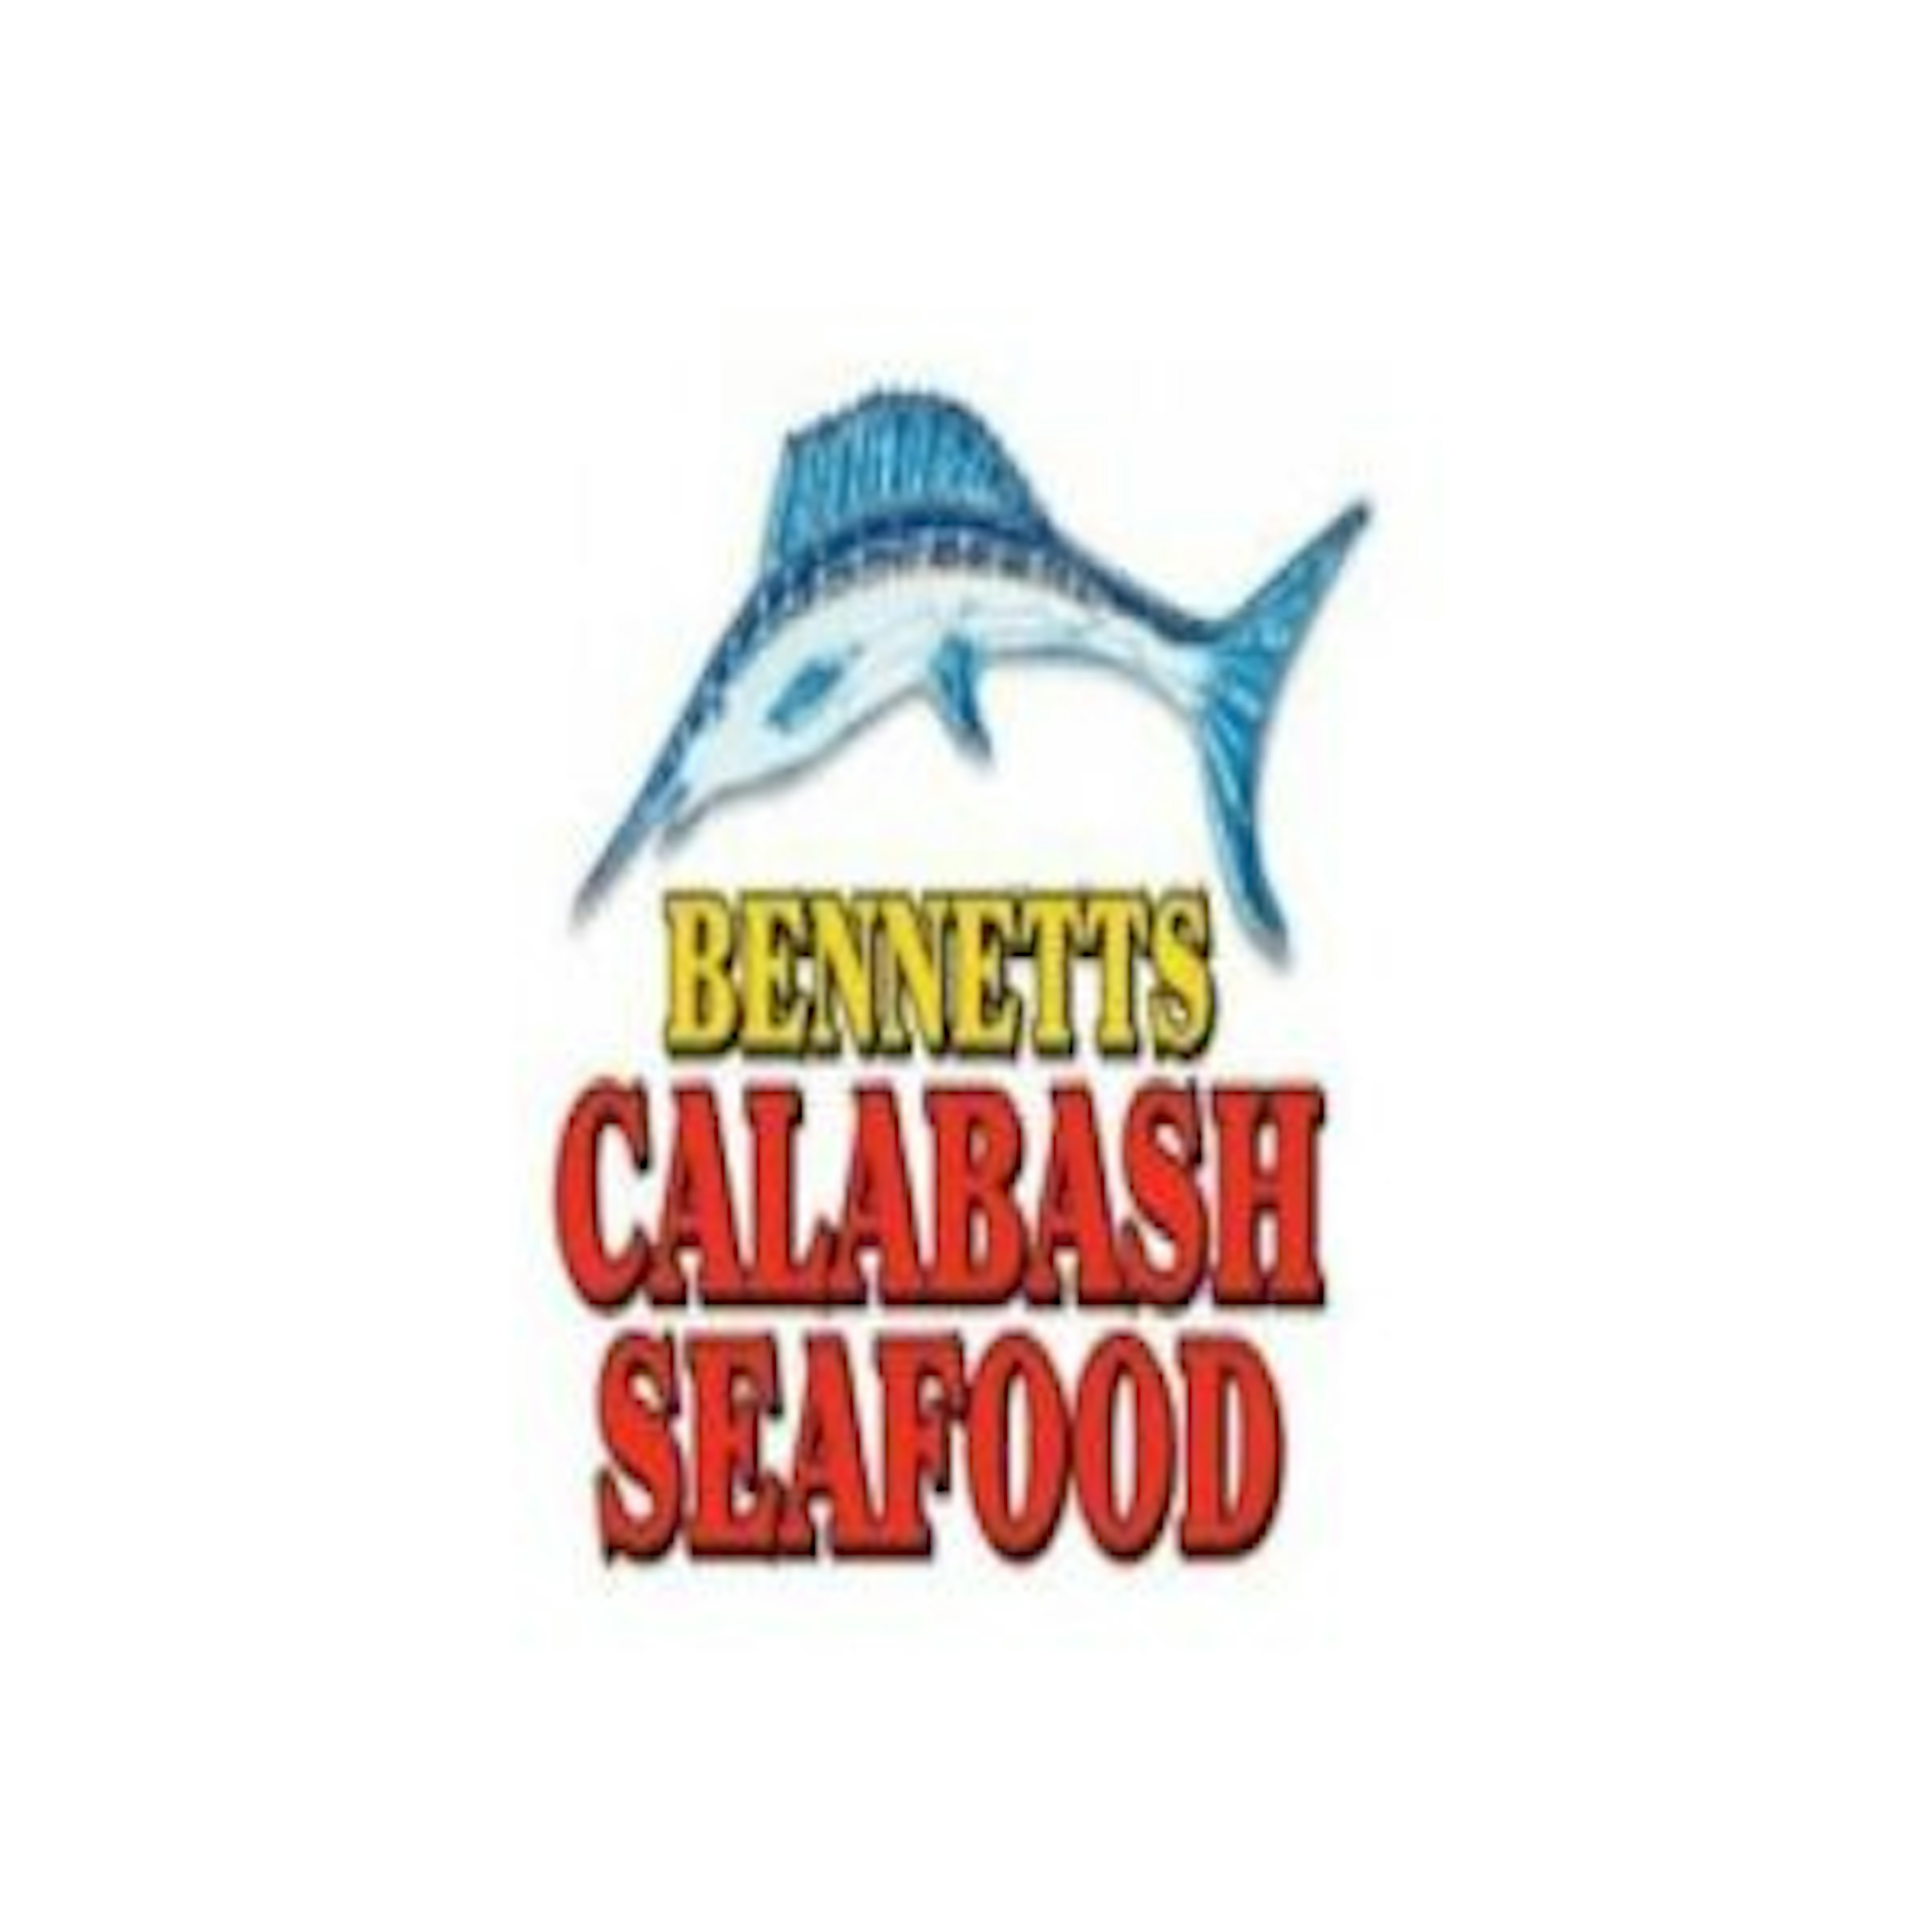 Bennetts Calabash Seafood